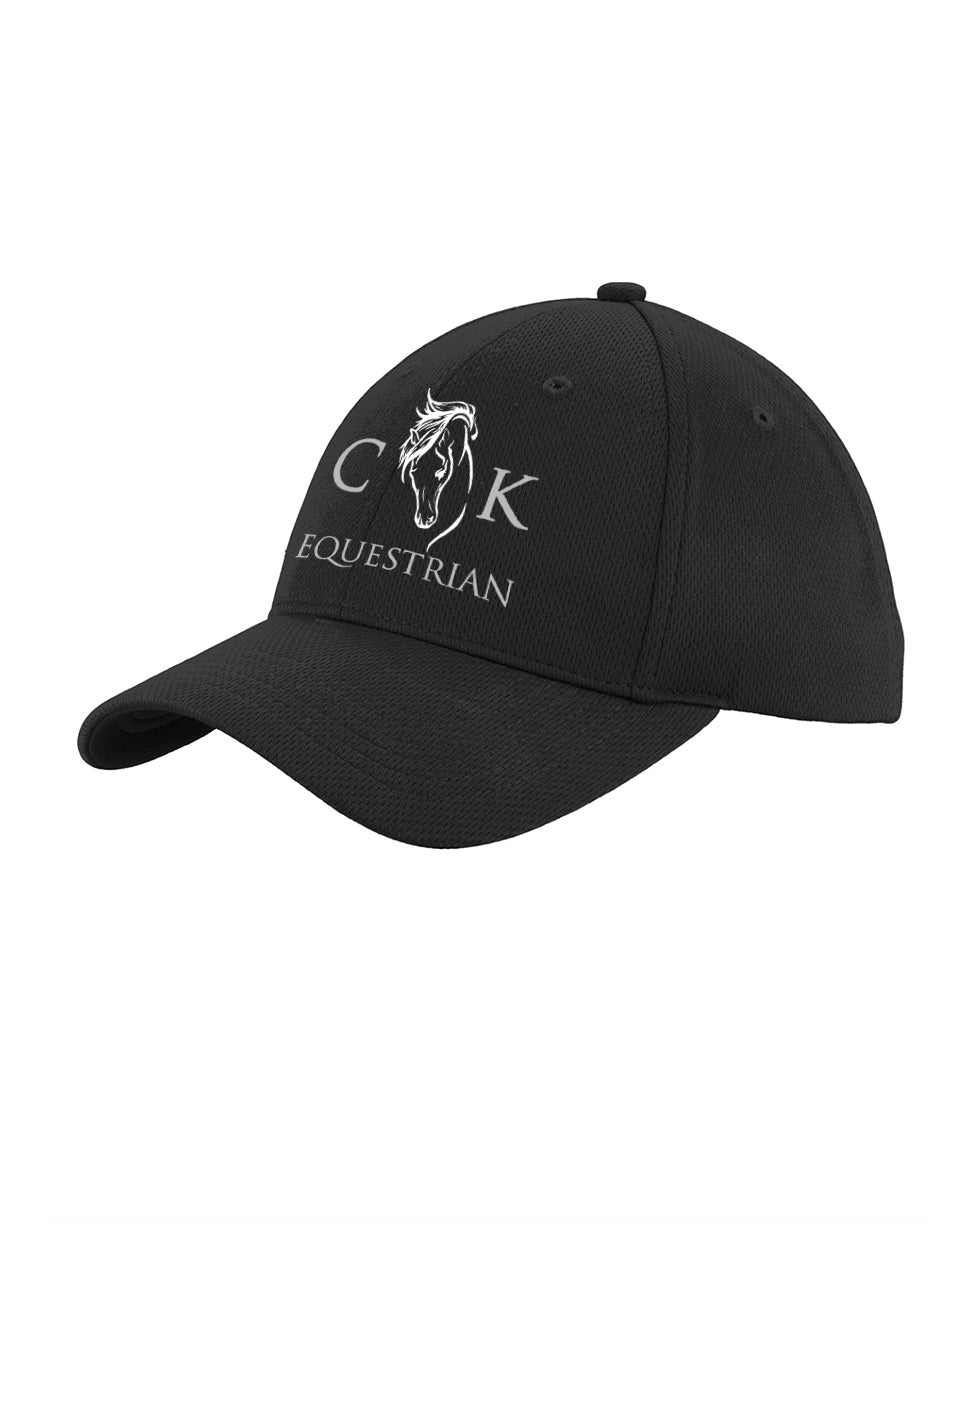 CK Equestrian Sport-Tek® PosiCharge® RacerMesh® Cap